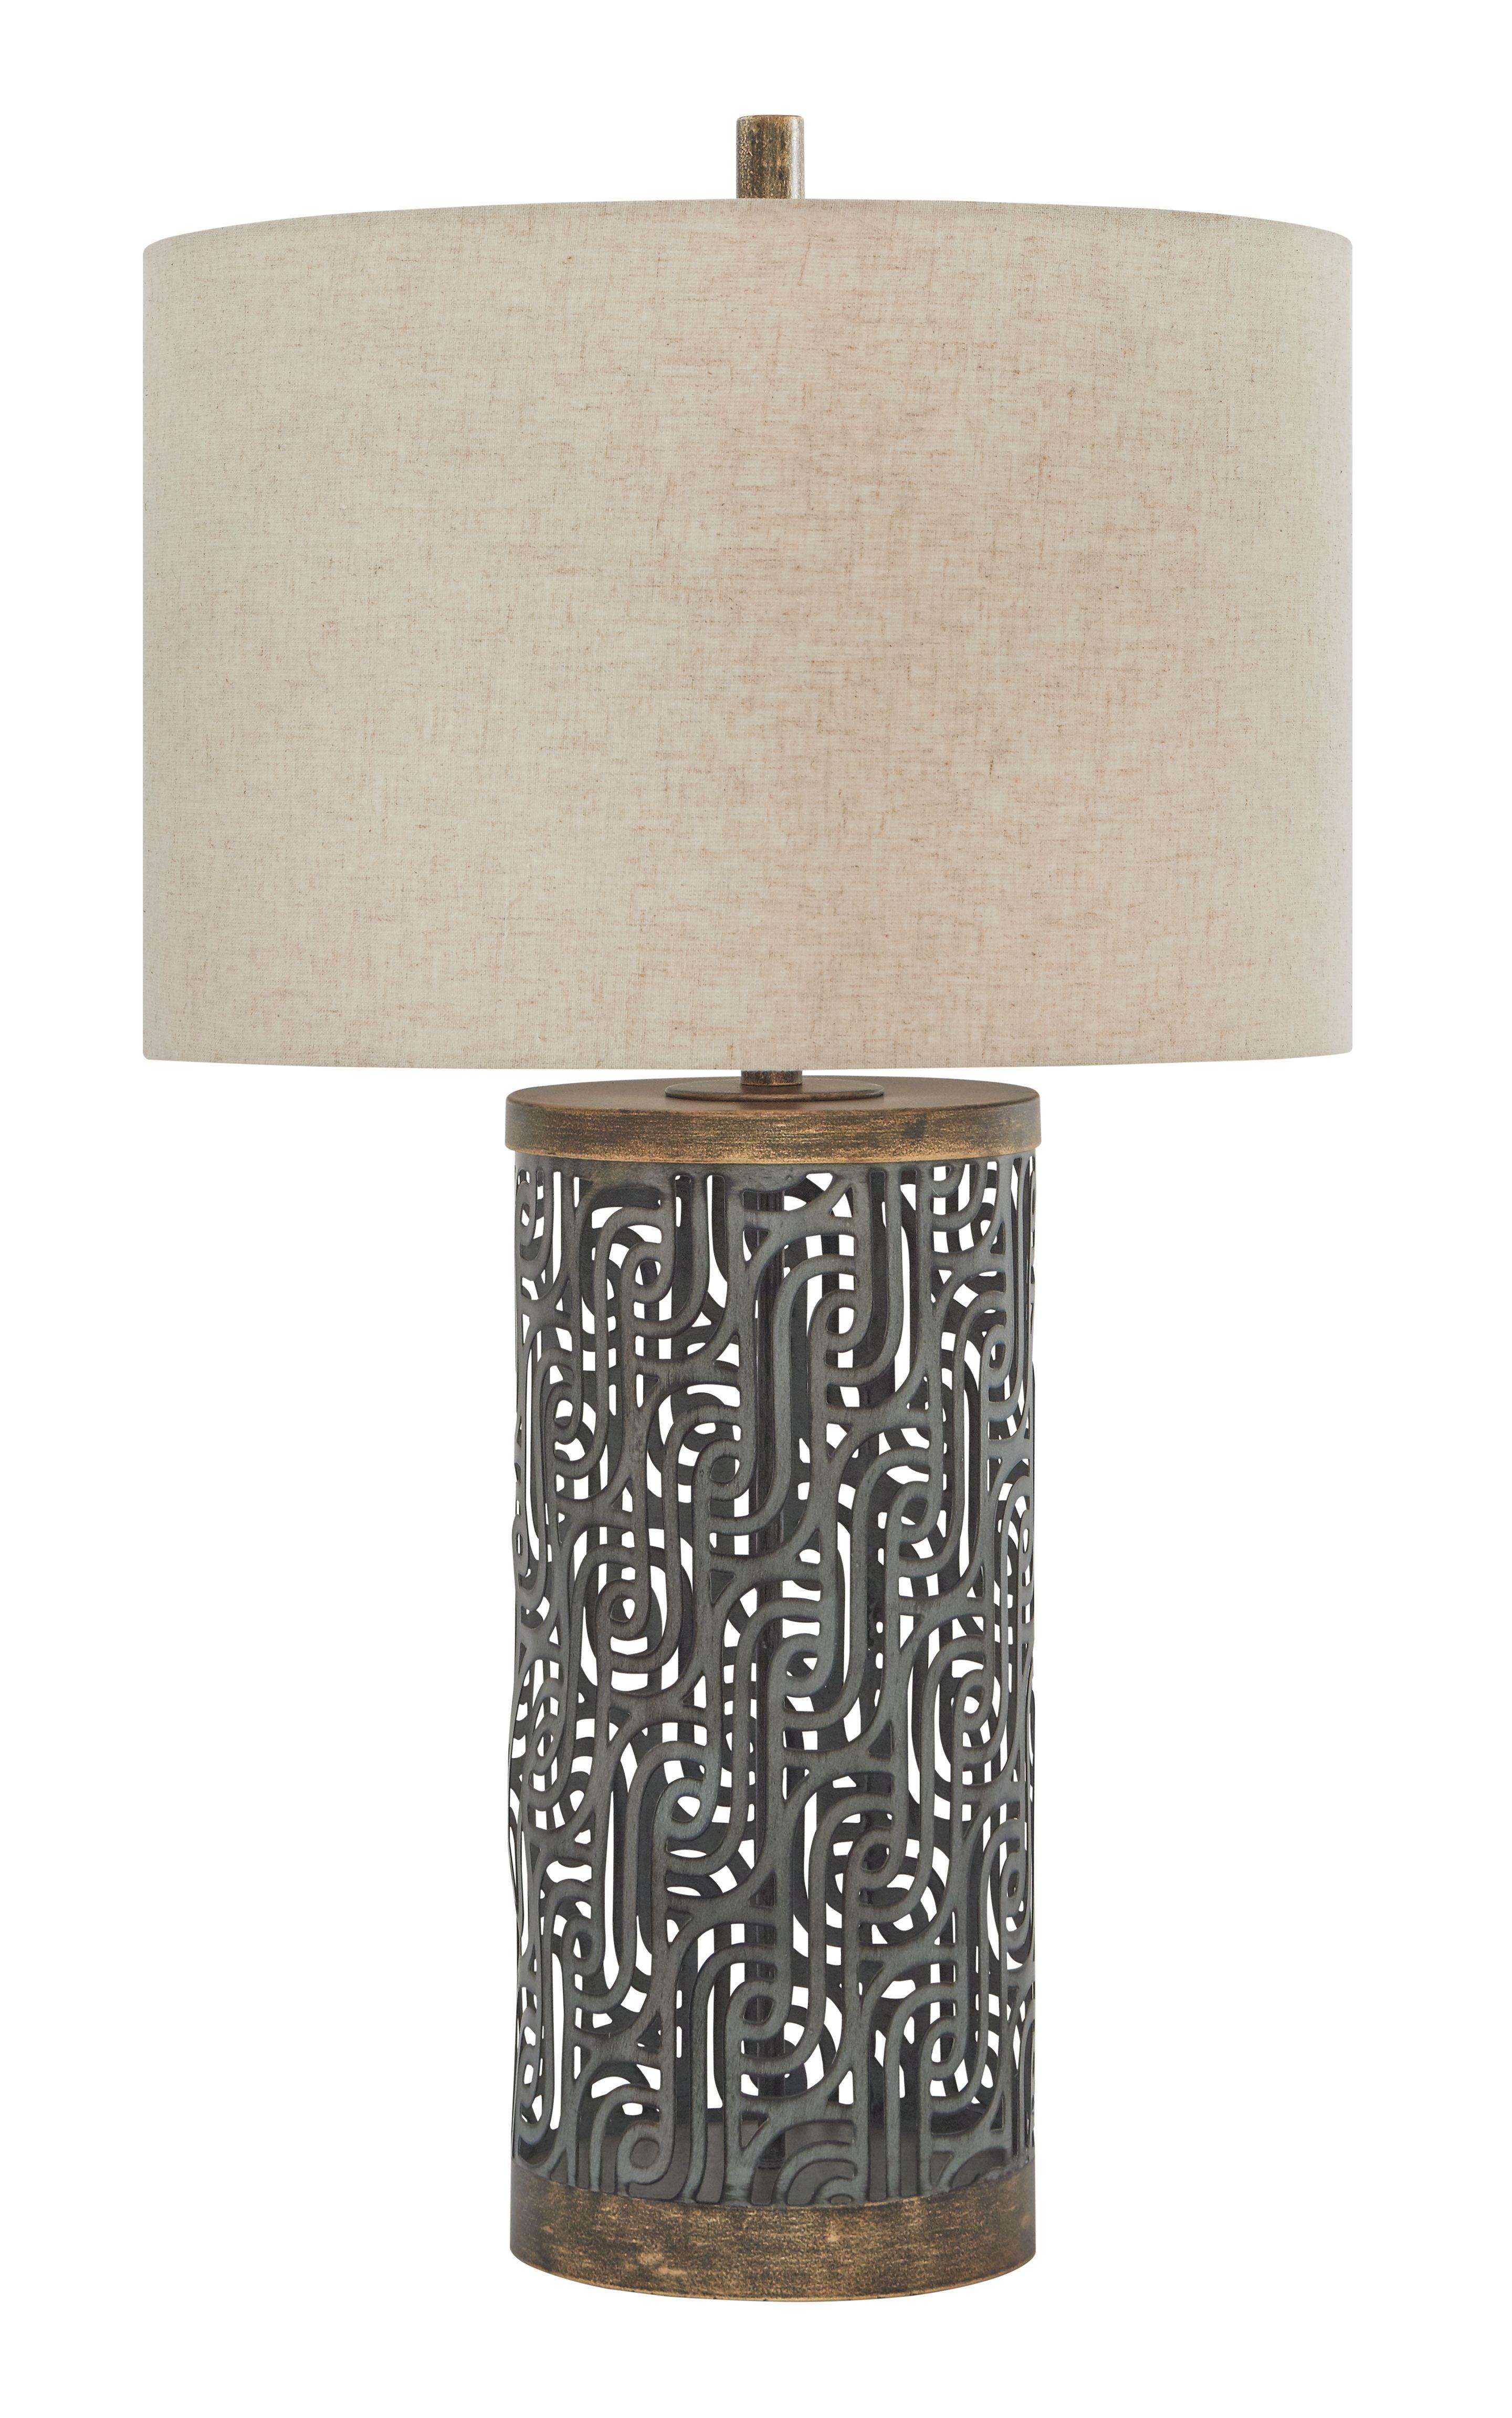 Ashley Furniture - Dayo - Gray / Gold Finish - Metal Table Lamp - 5th Avenue Furniture